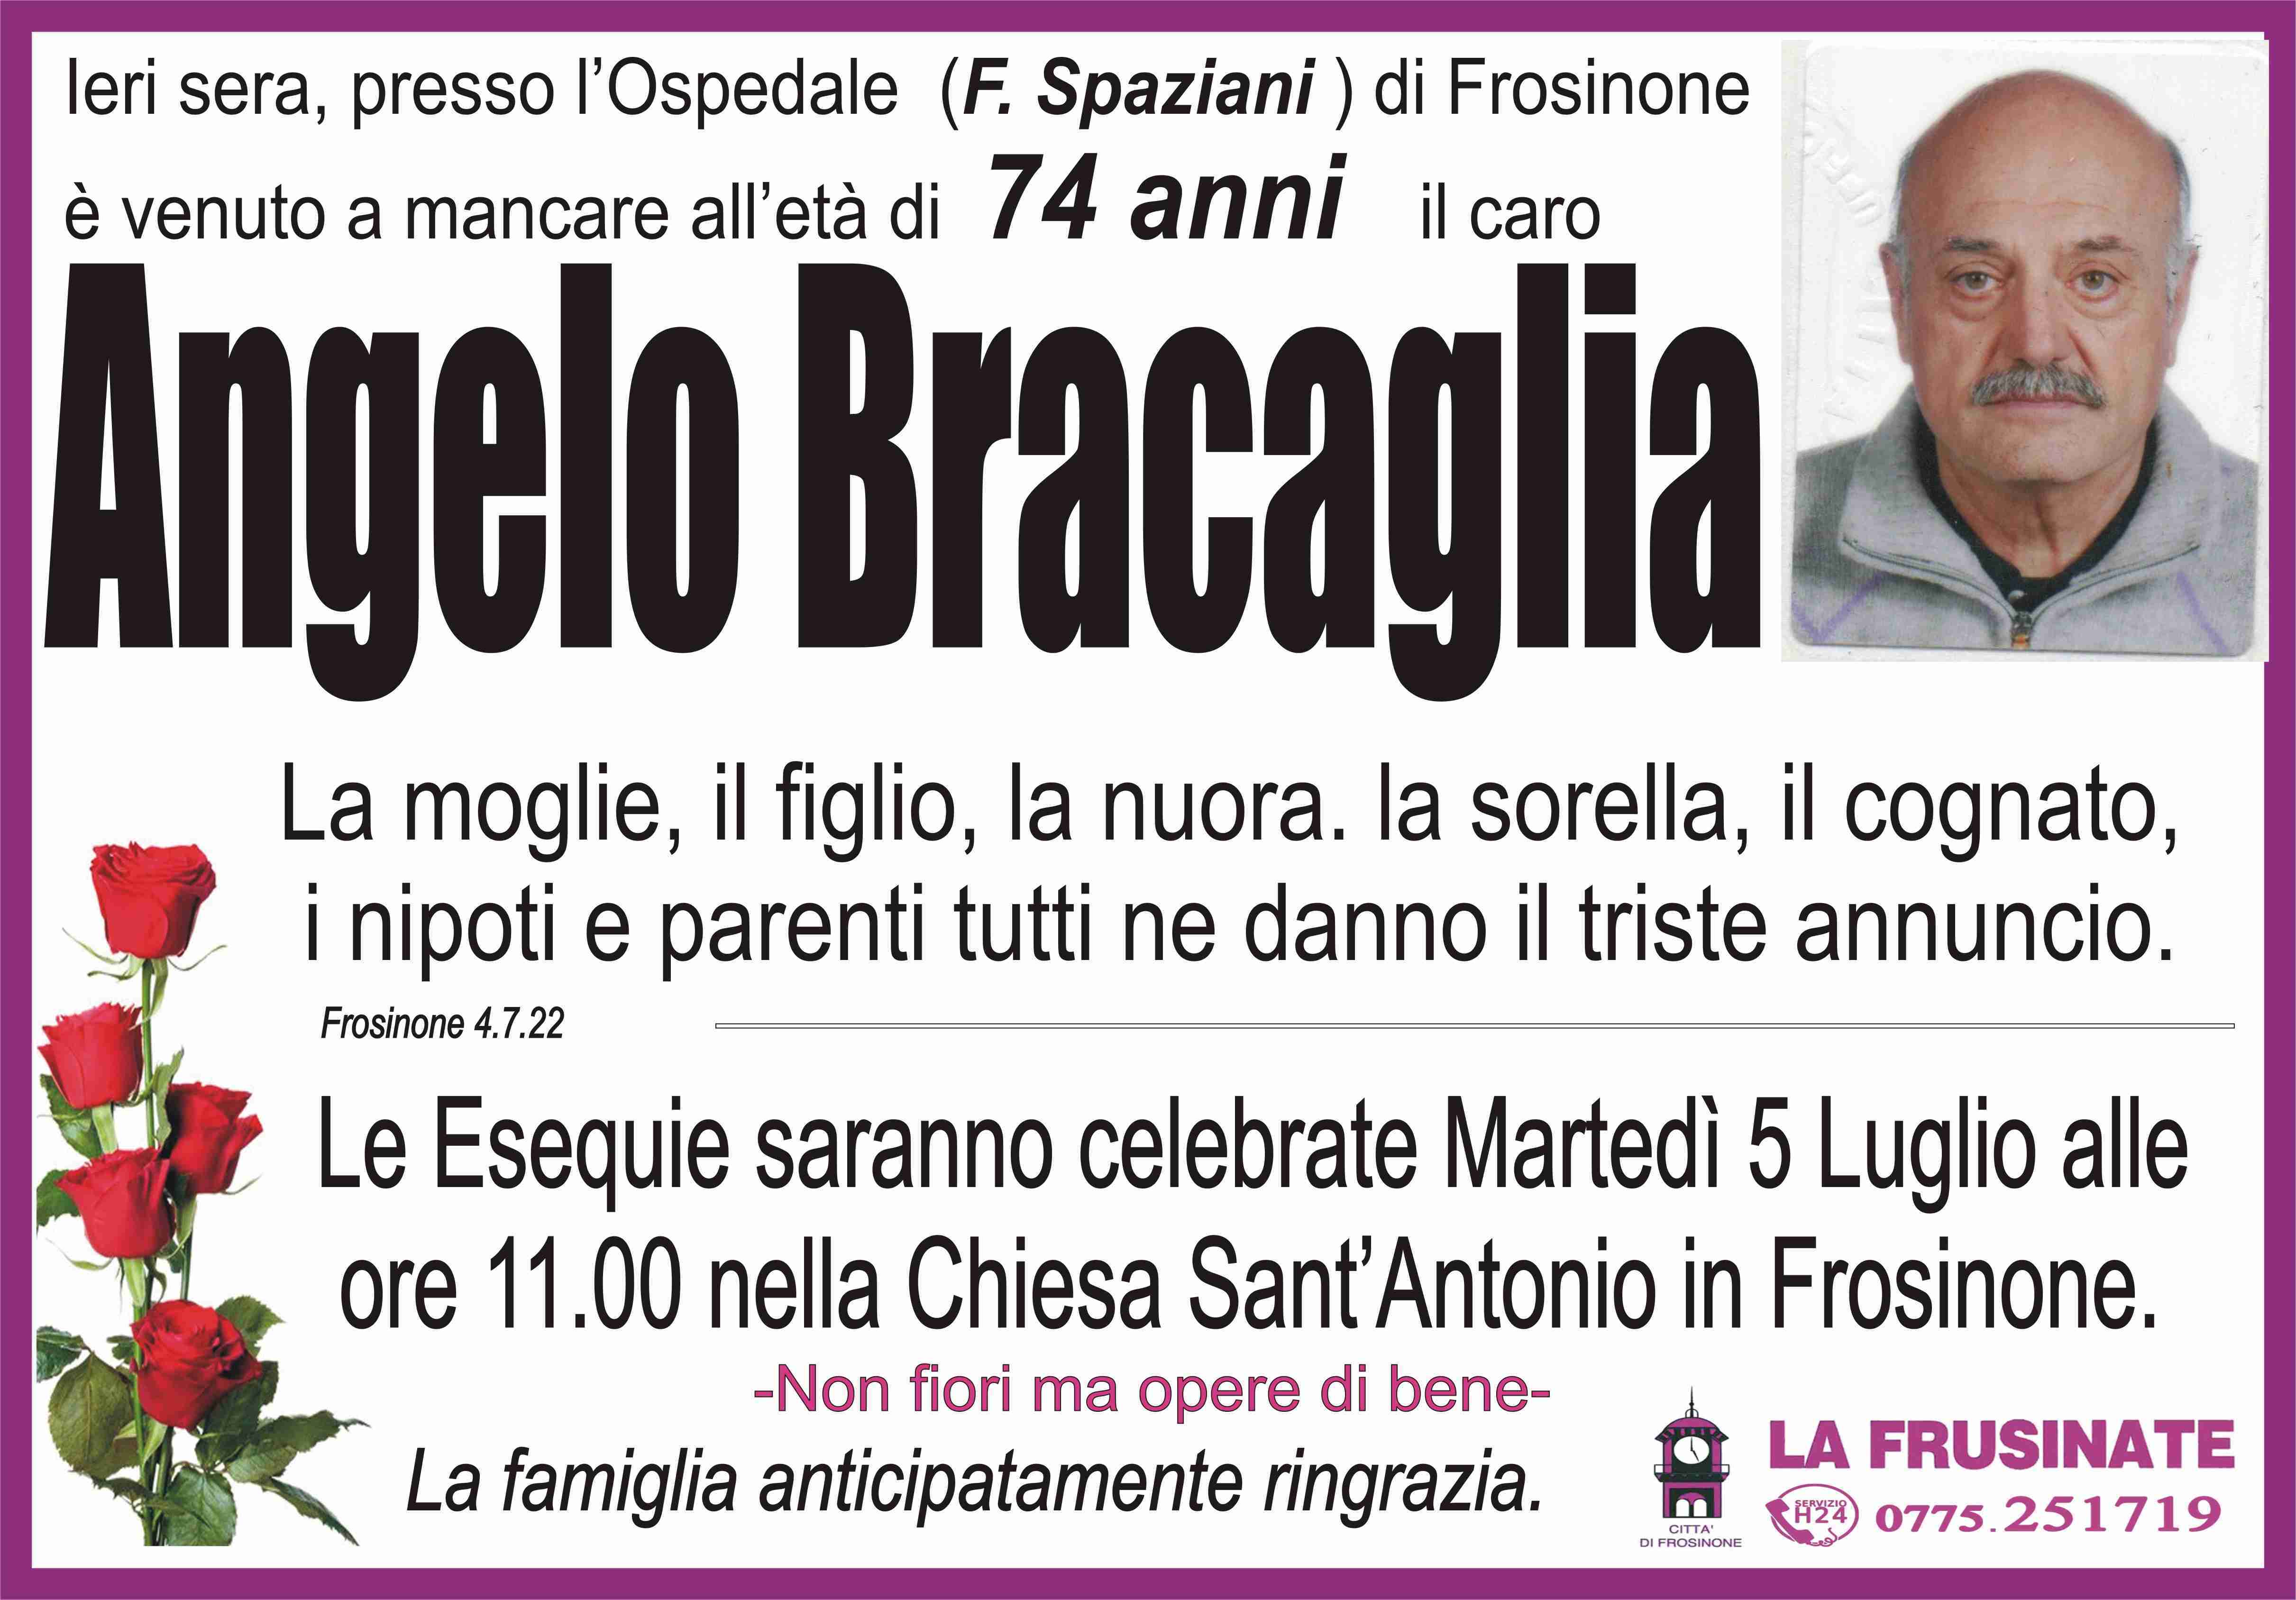 Angelo Bracaglia